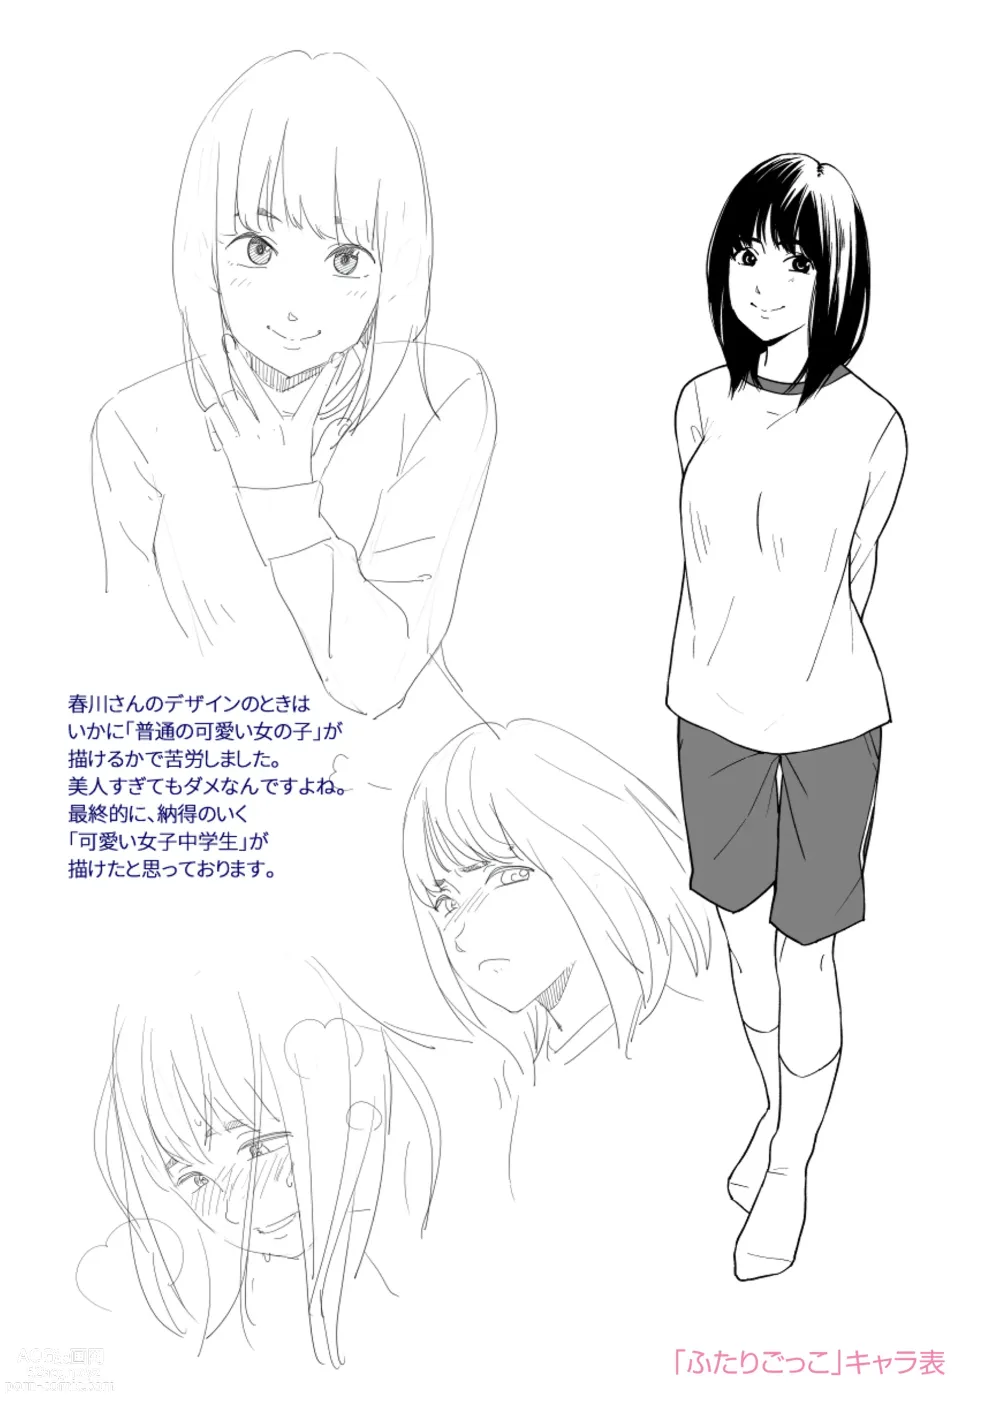 Page 187 of manga Shishunki no Eros - puberty eros + DLsite Kounyu Tokuten